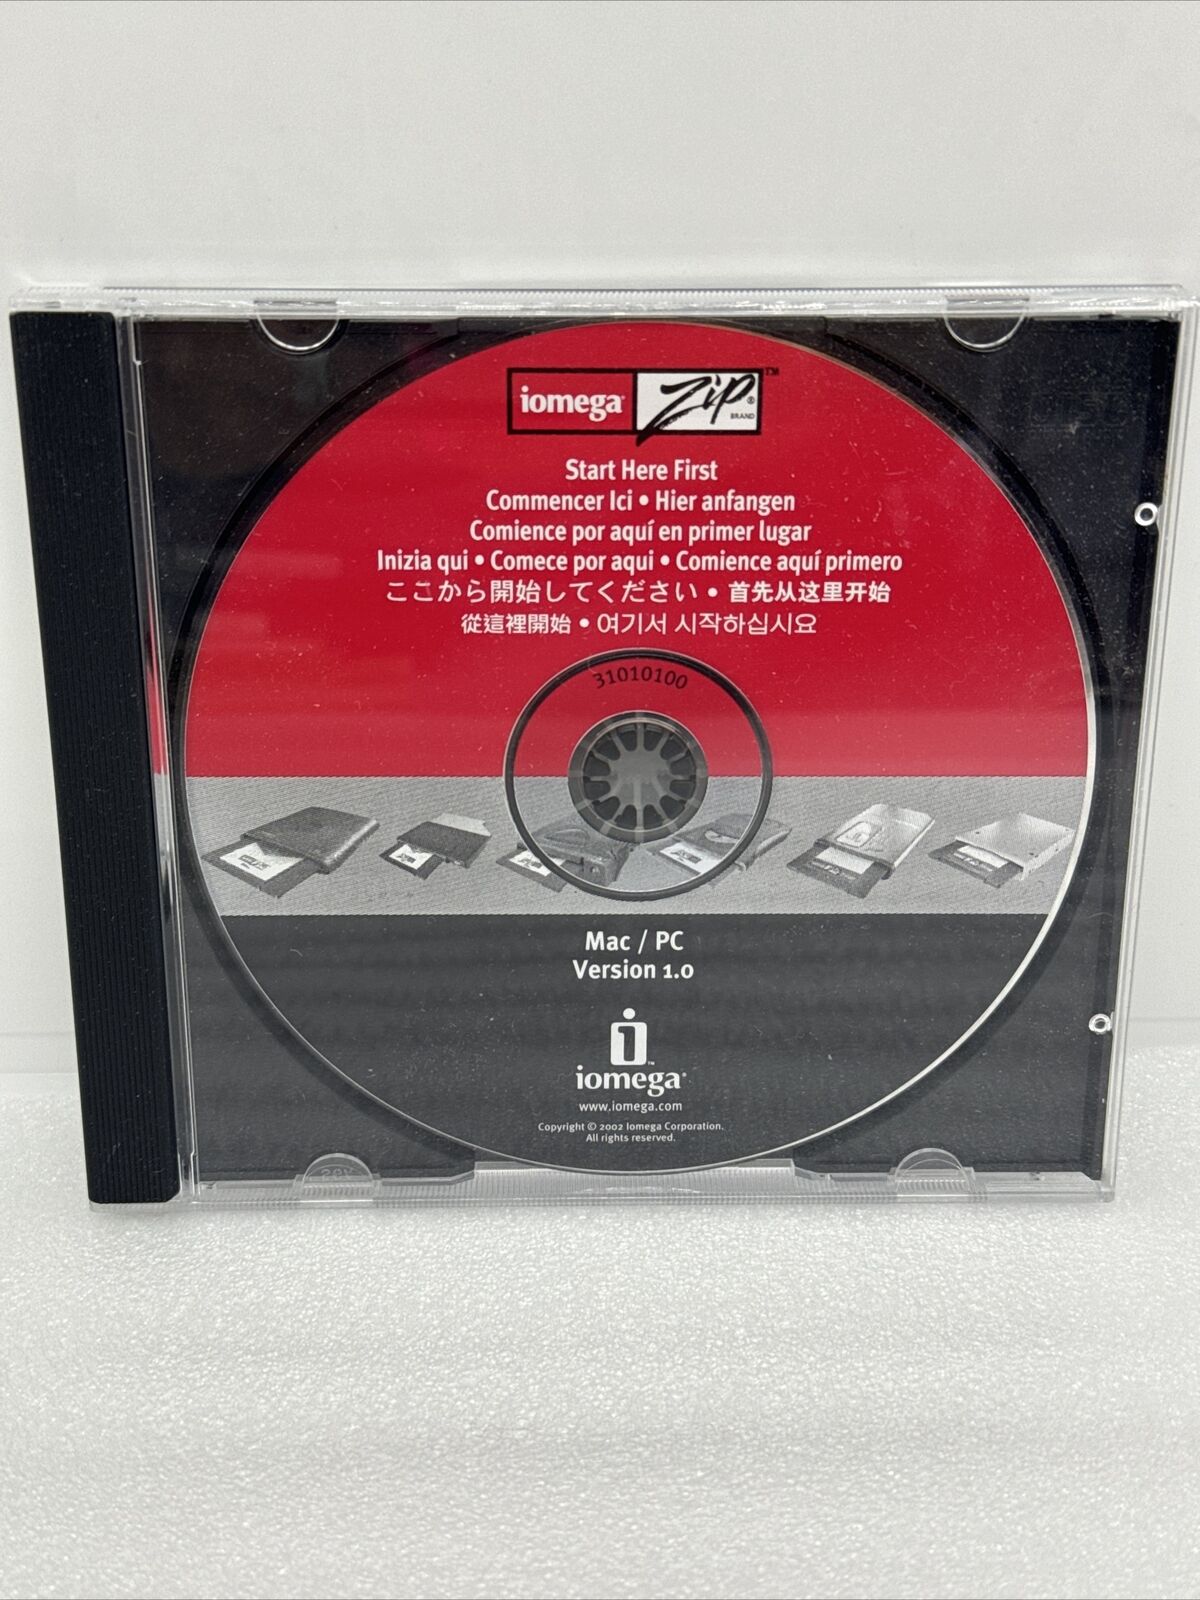 Vintage 2002 Iomega Zip Mac/PC Version 1.0 CD